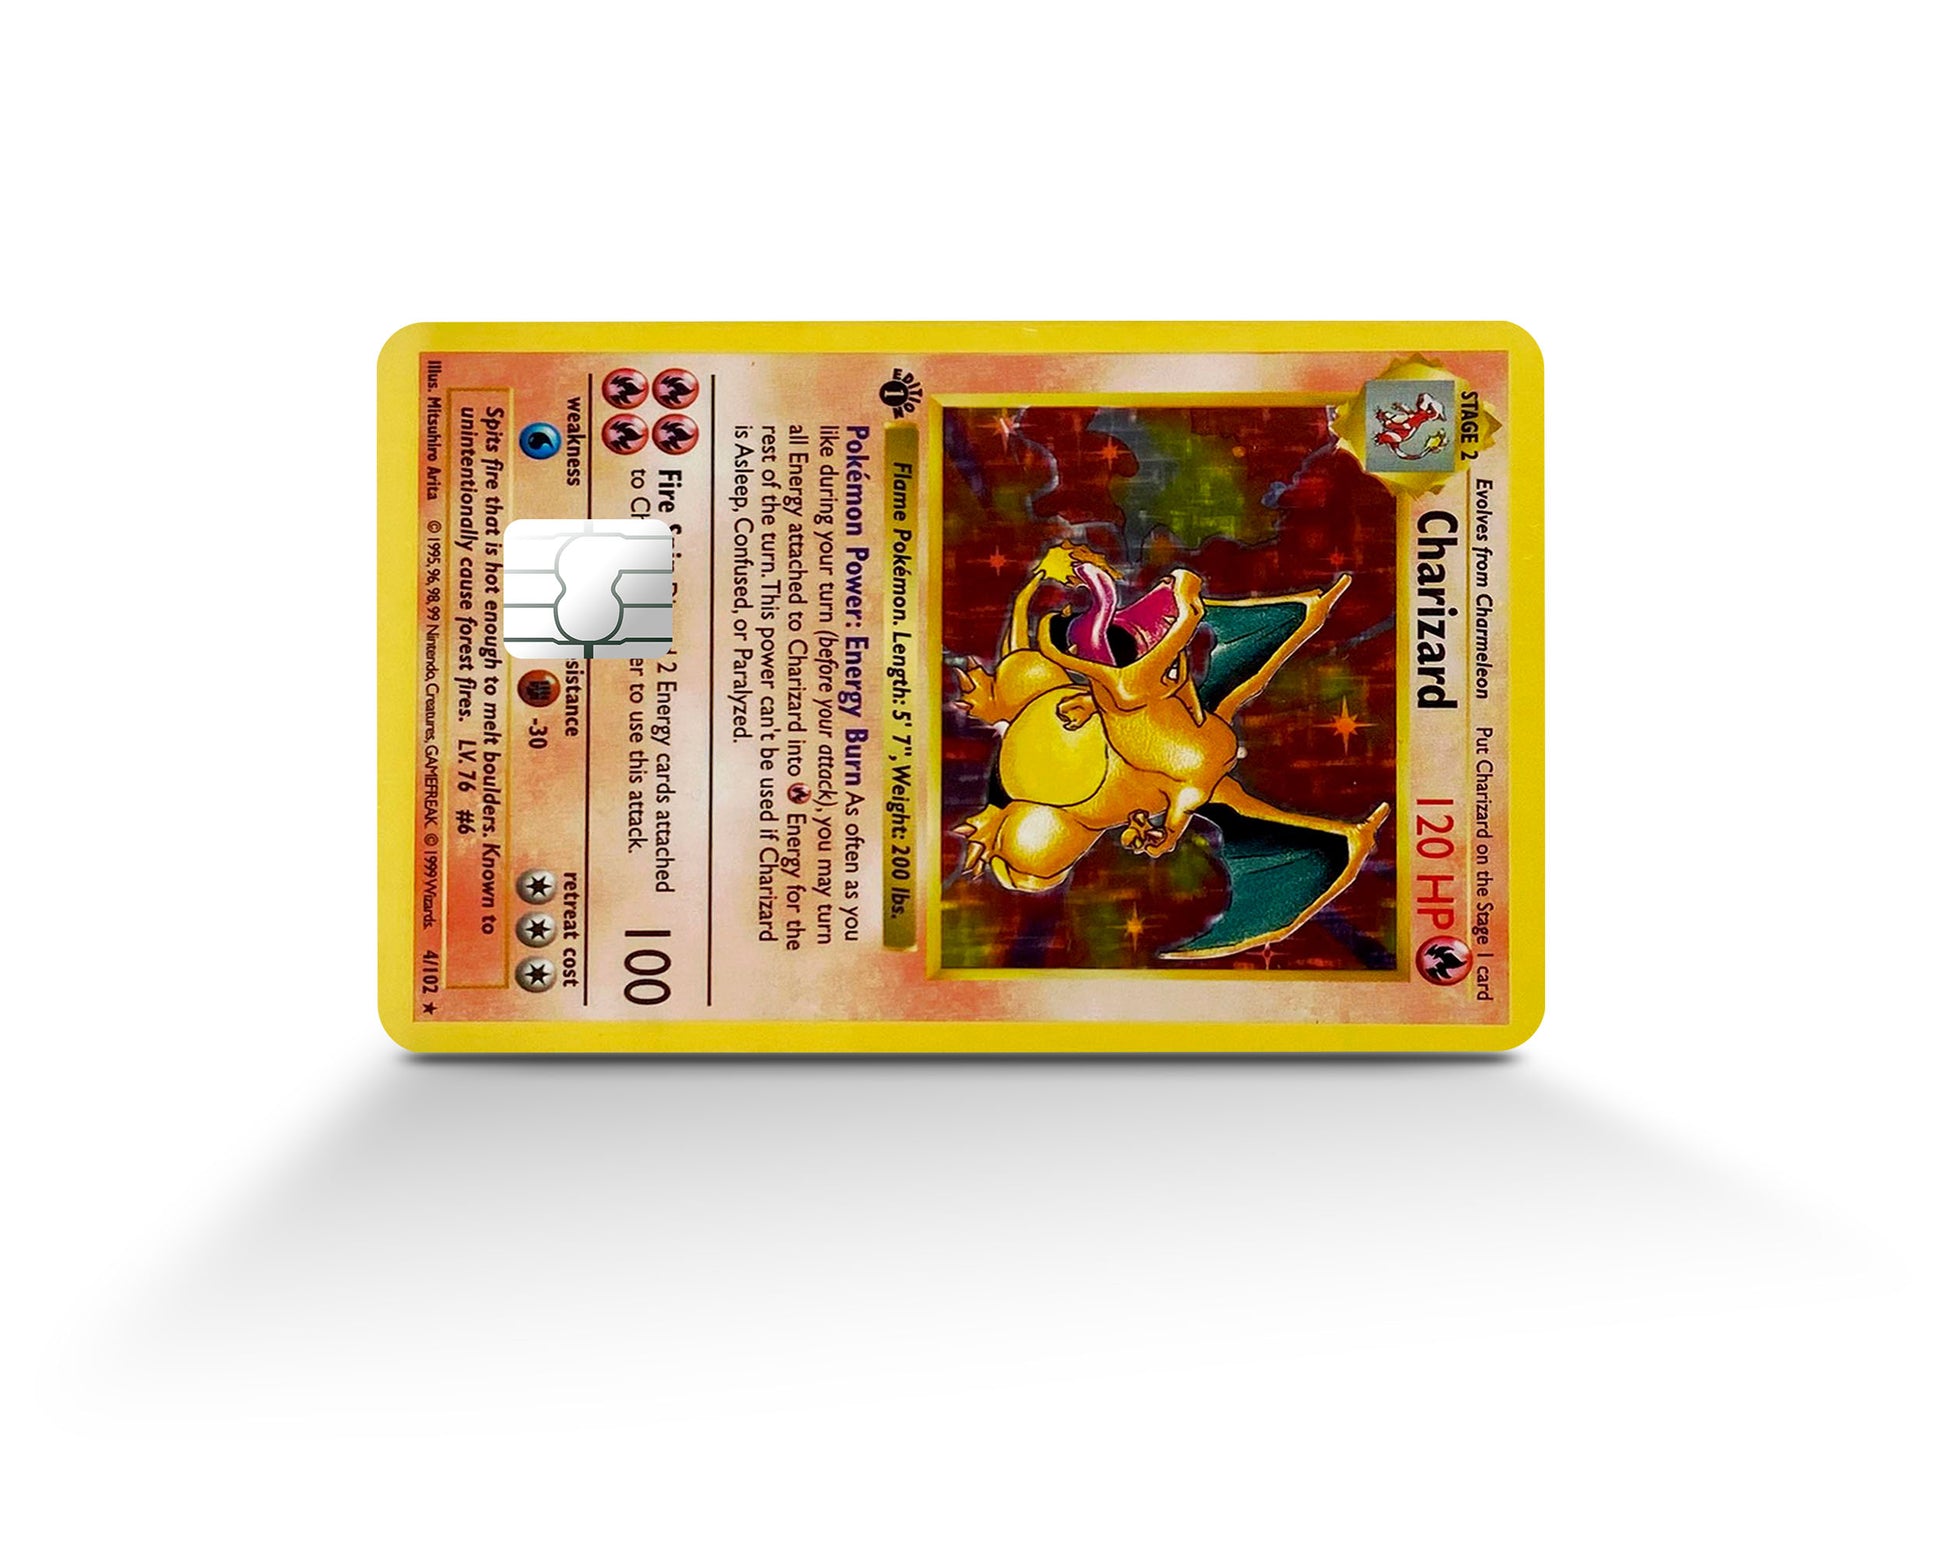 Charizard credit card skin version 2.0 : r/PokemonTCG